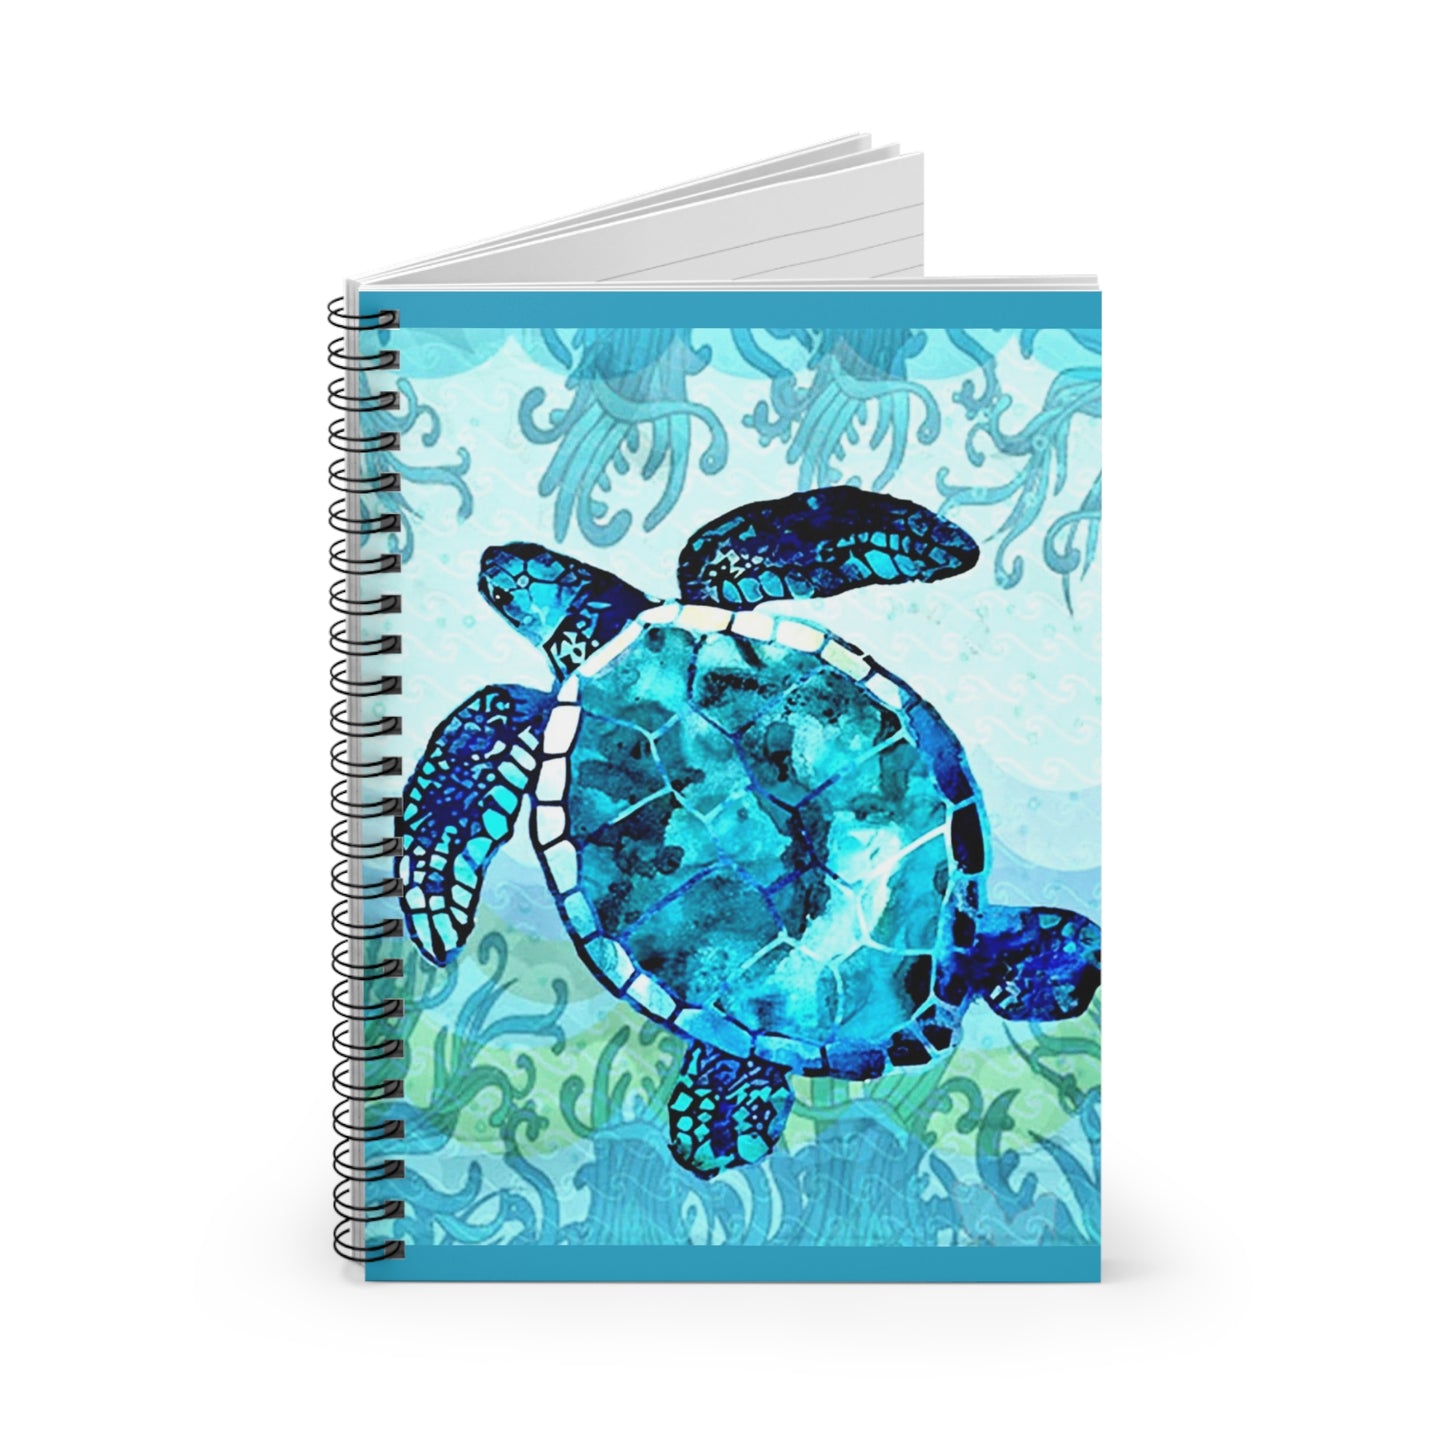 Blue Turtle Journal Spiral Notebook - Ruled Line